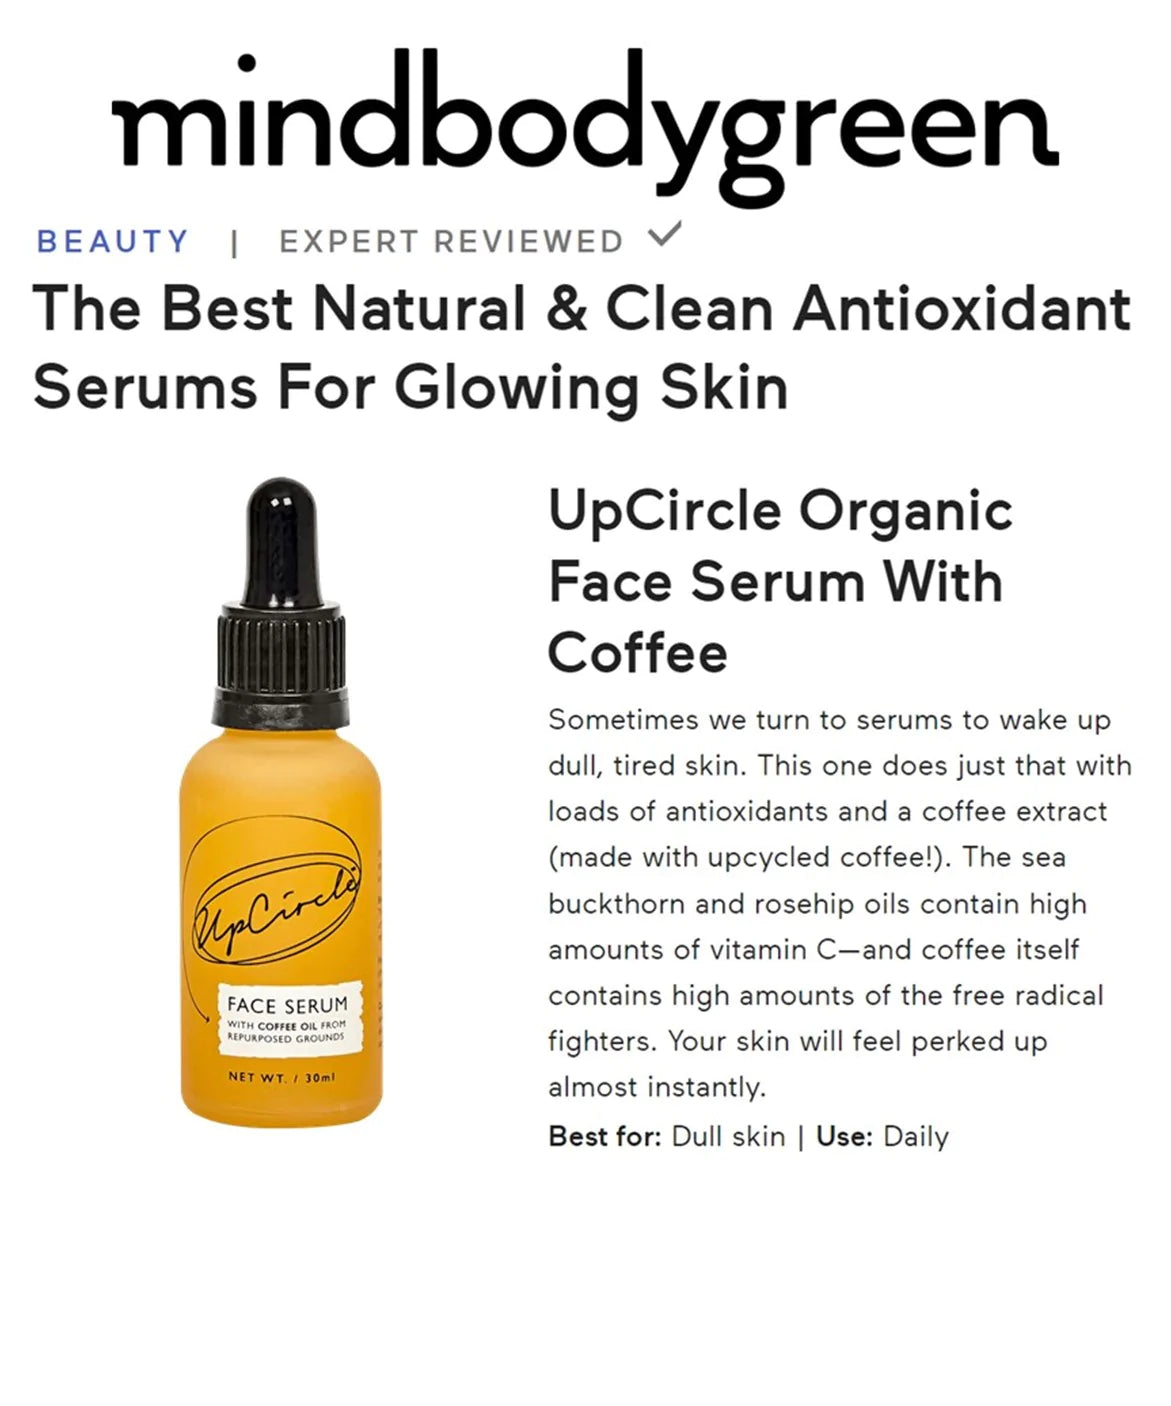 UpCircle Caffeinated Skincare Duo